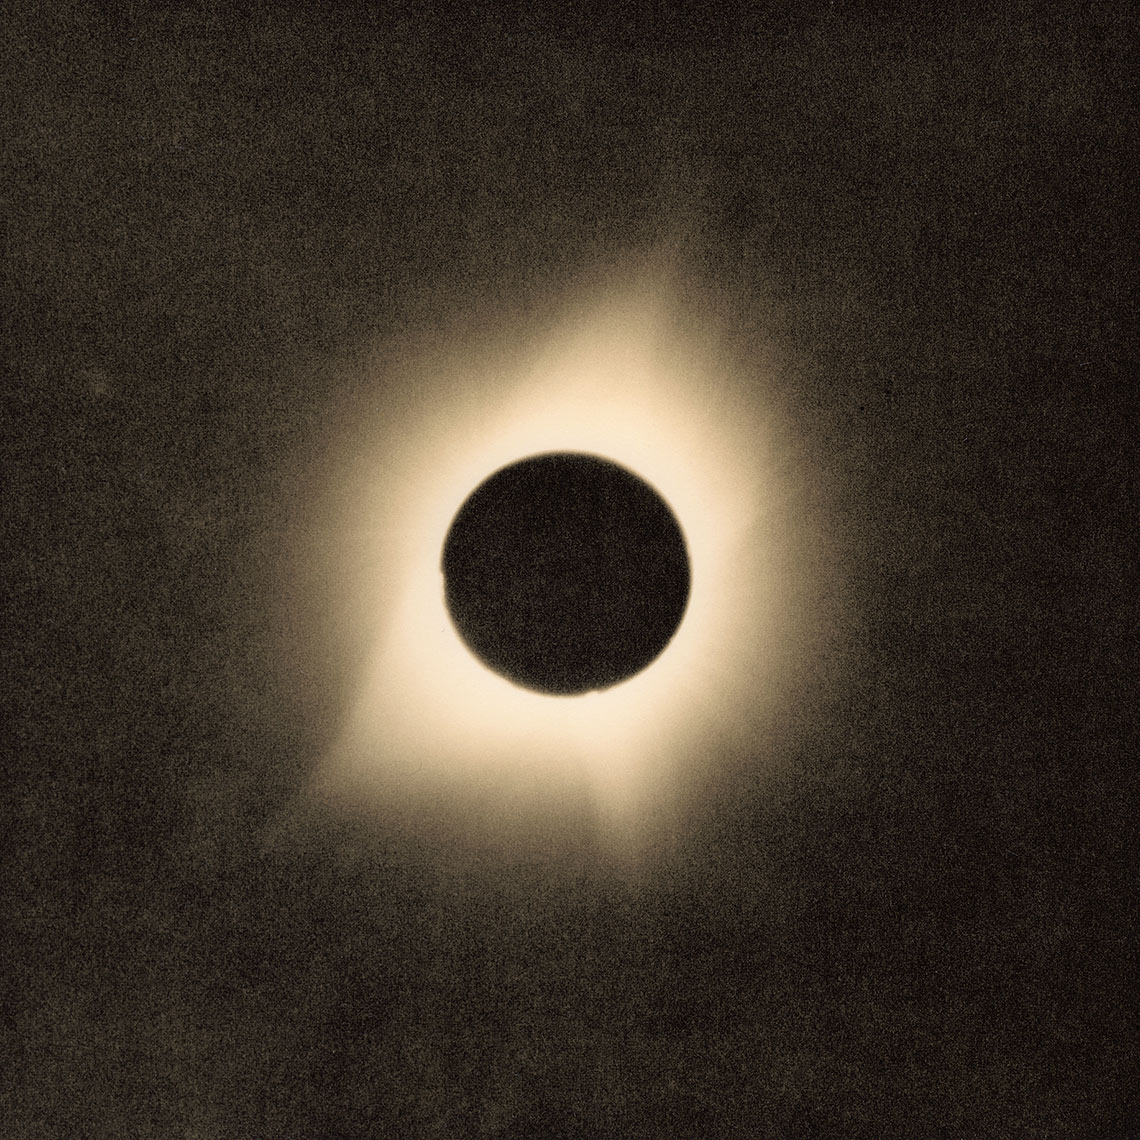 EthanPines_SolarEclipse_Corona